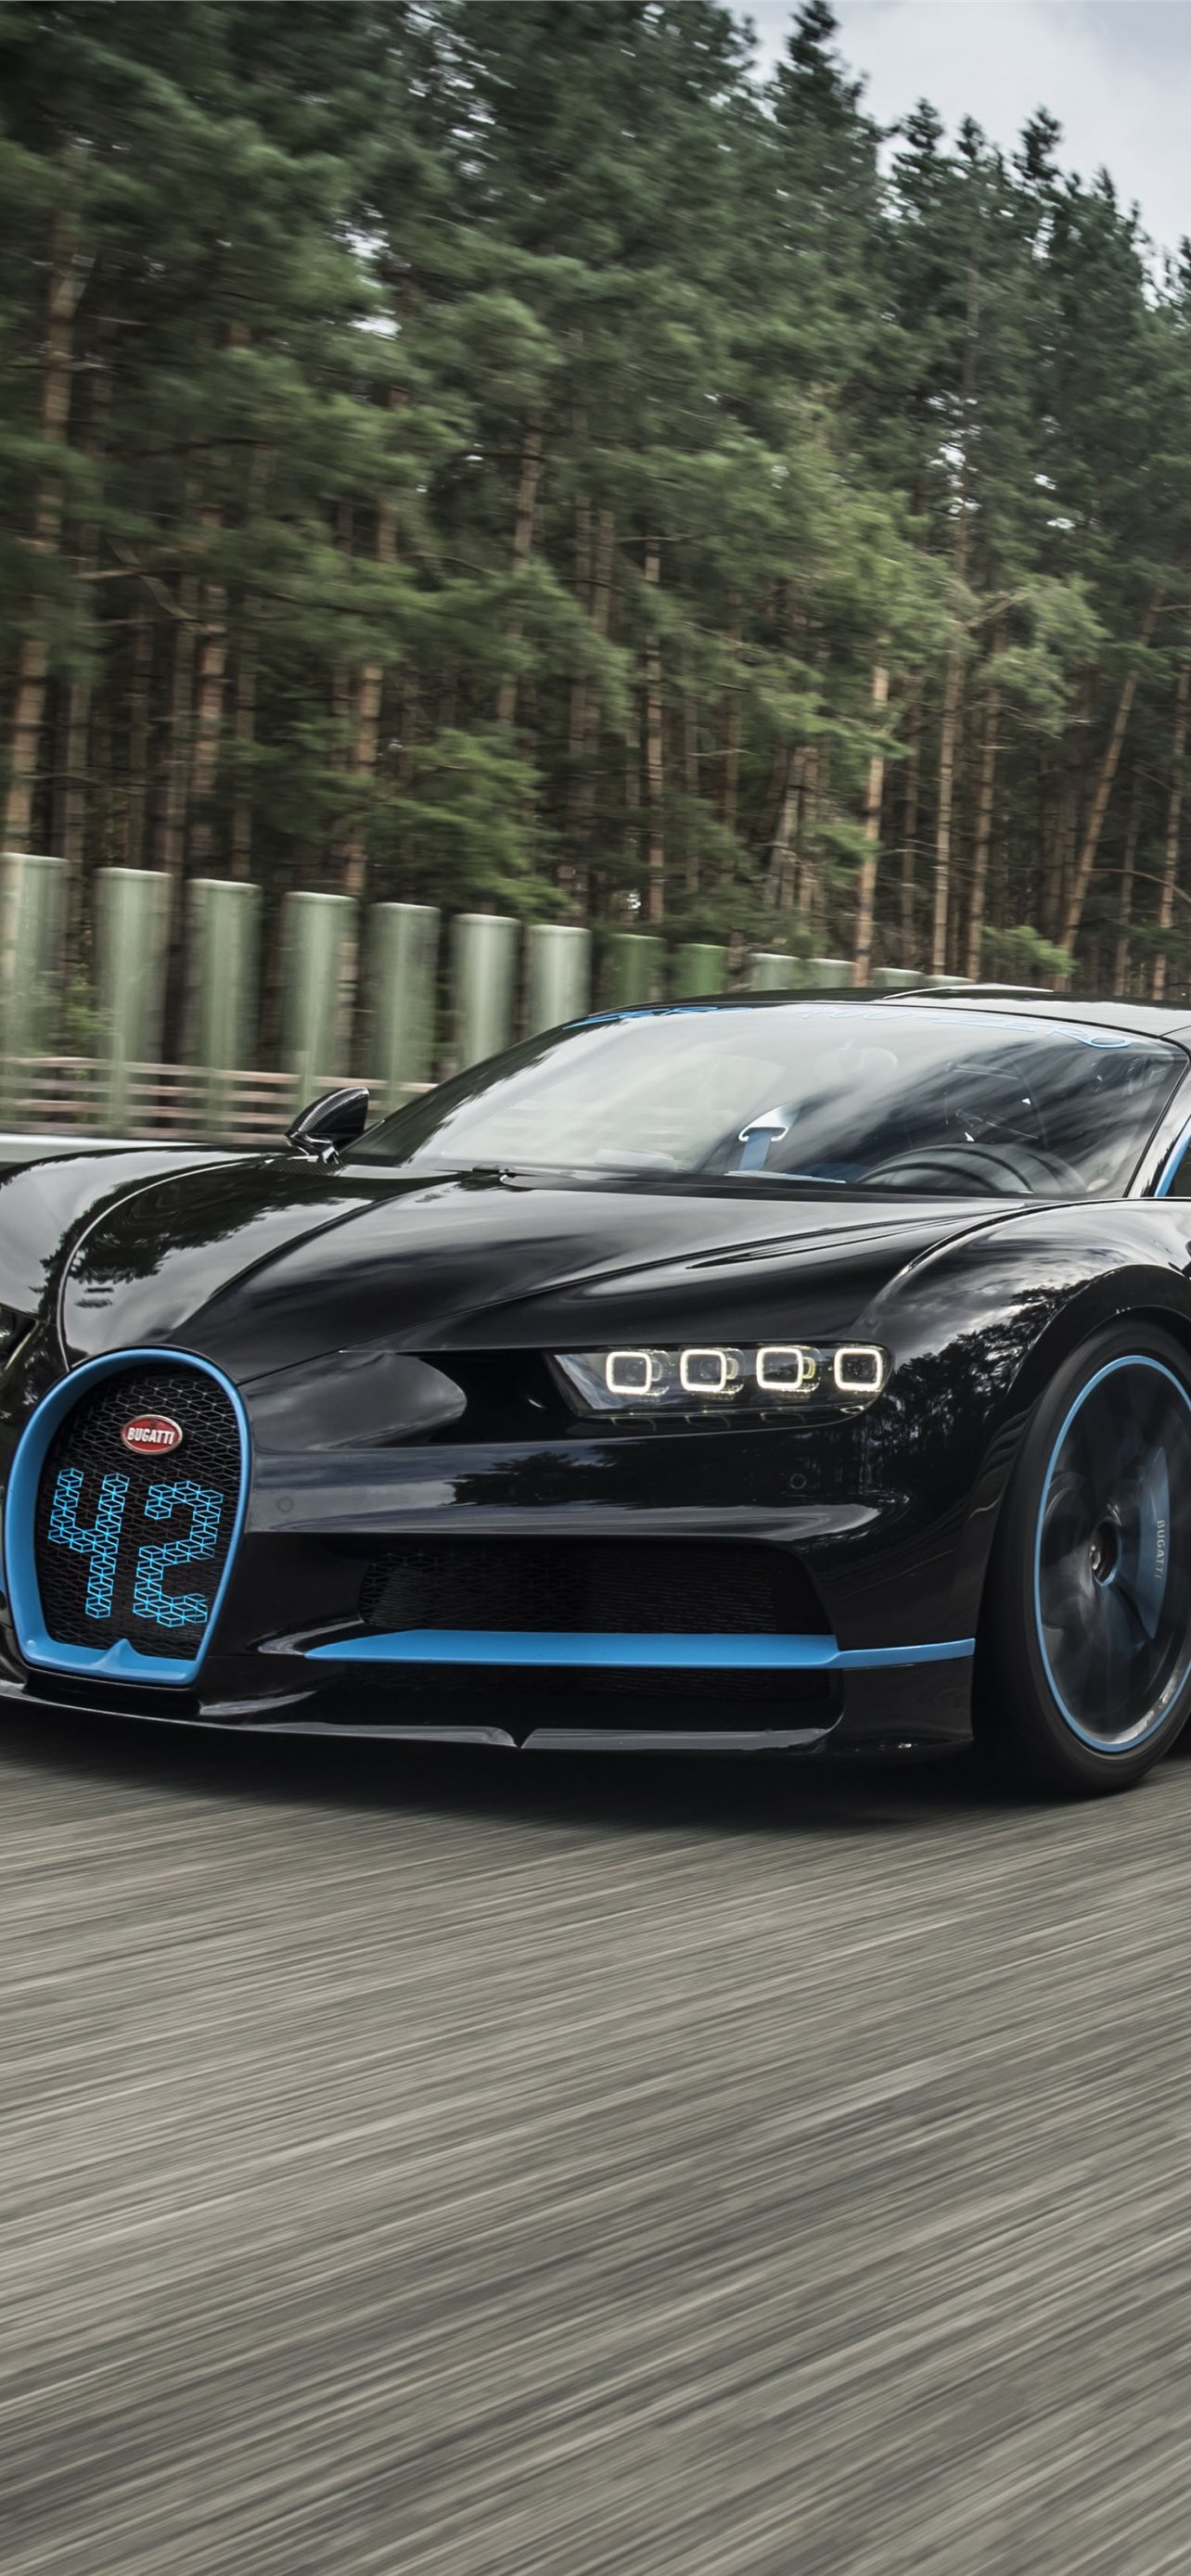 Bugatti Chiron hypercar 5k Cars Bikes iPhone Wallpapers Free Download